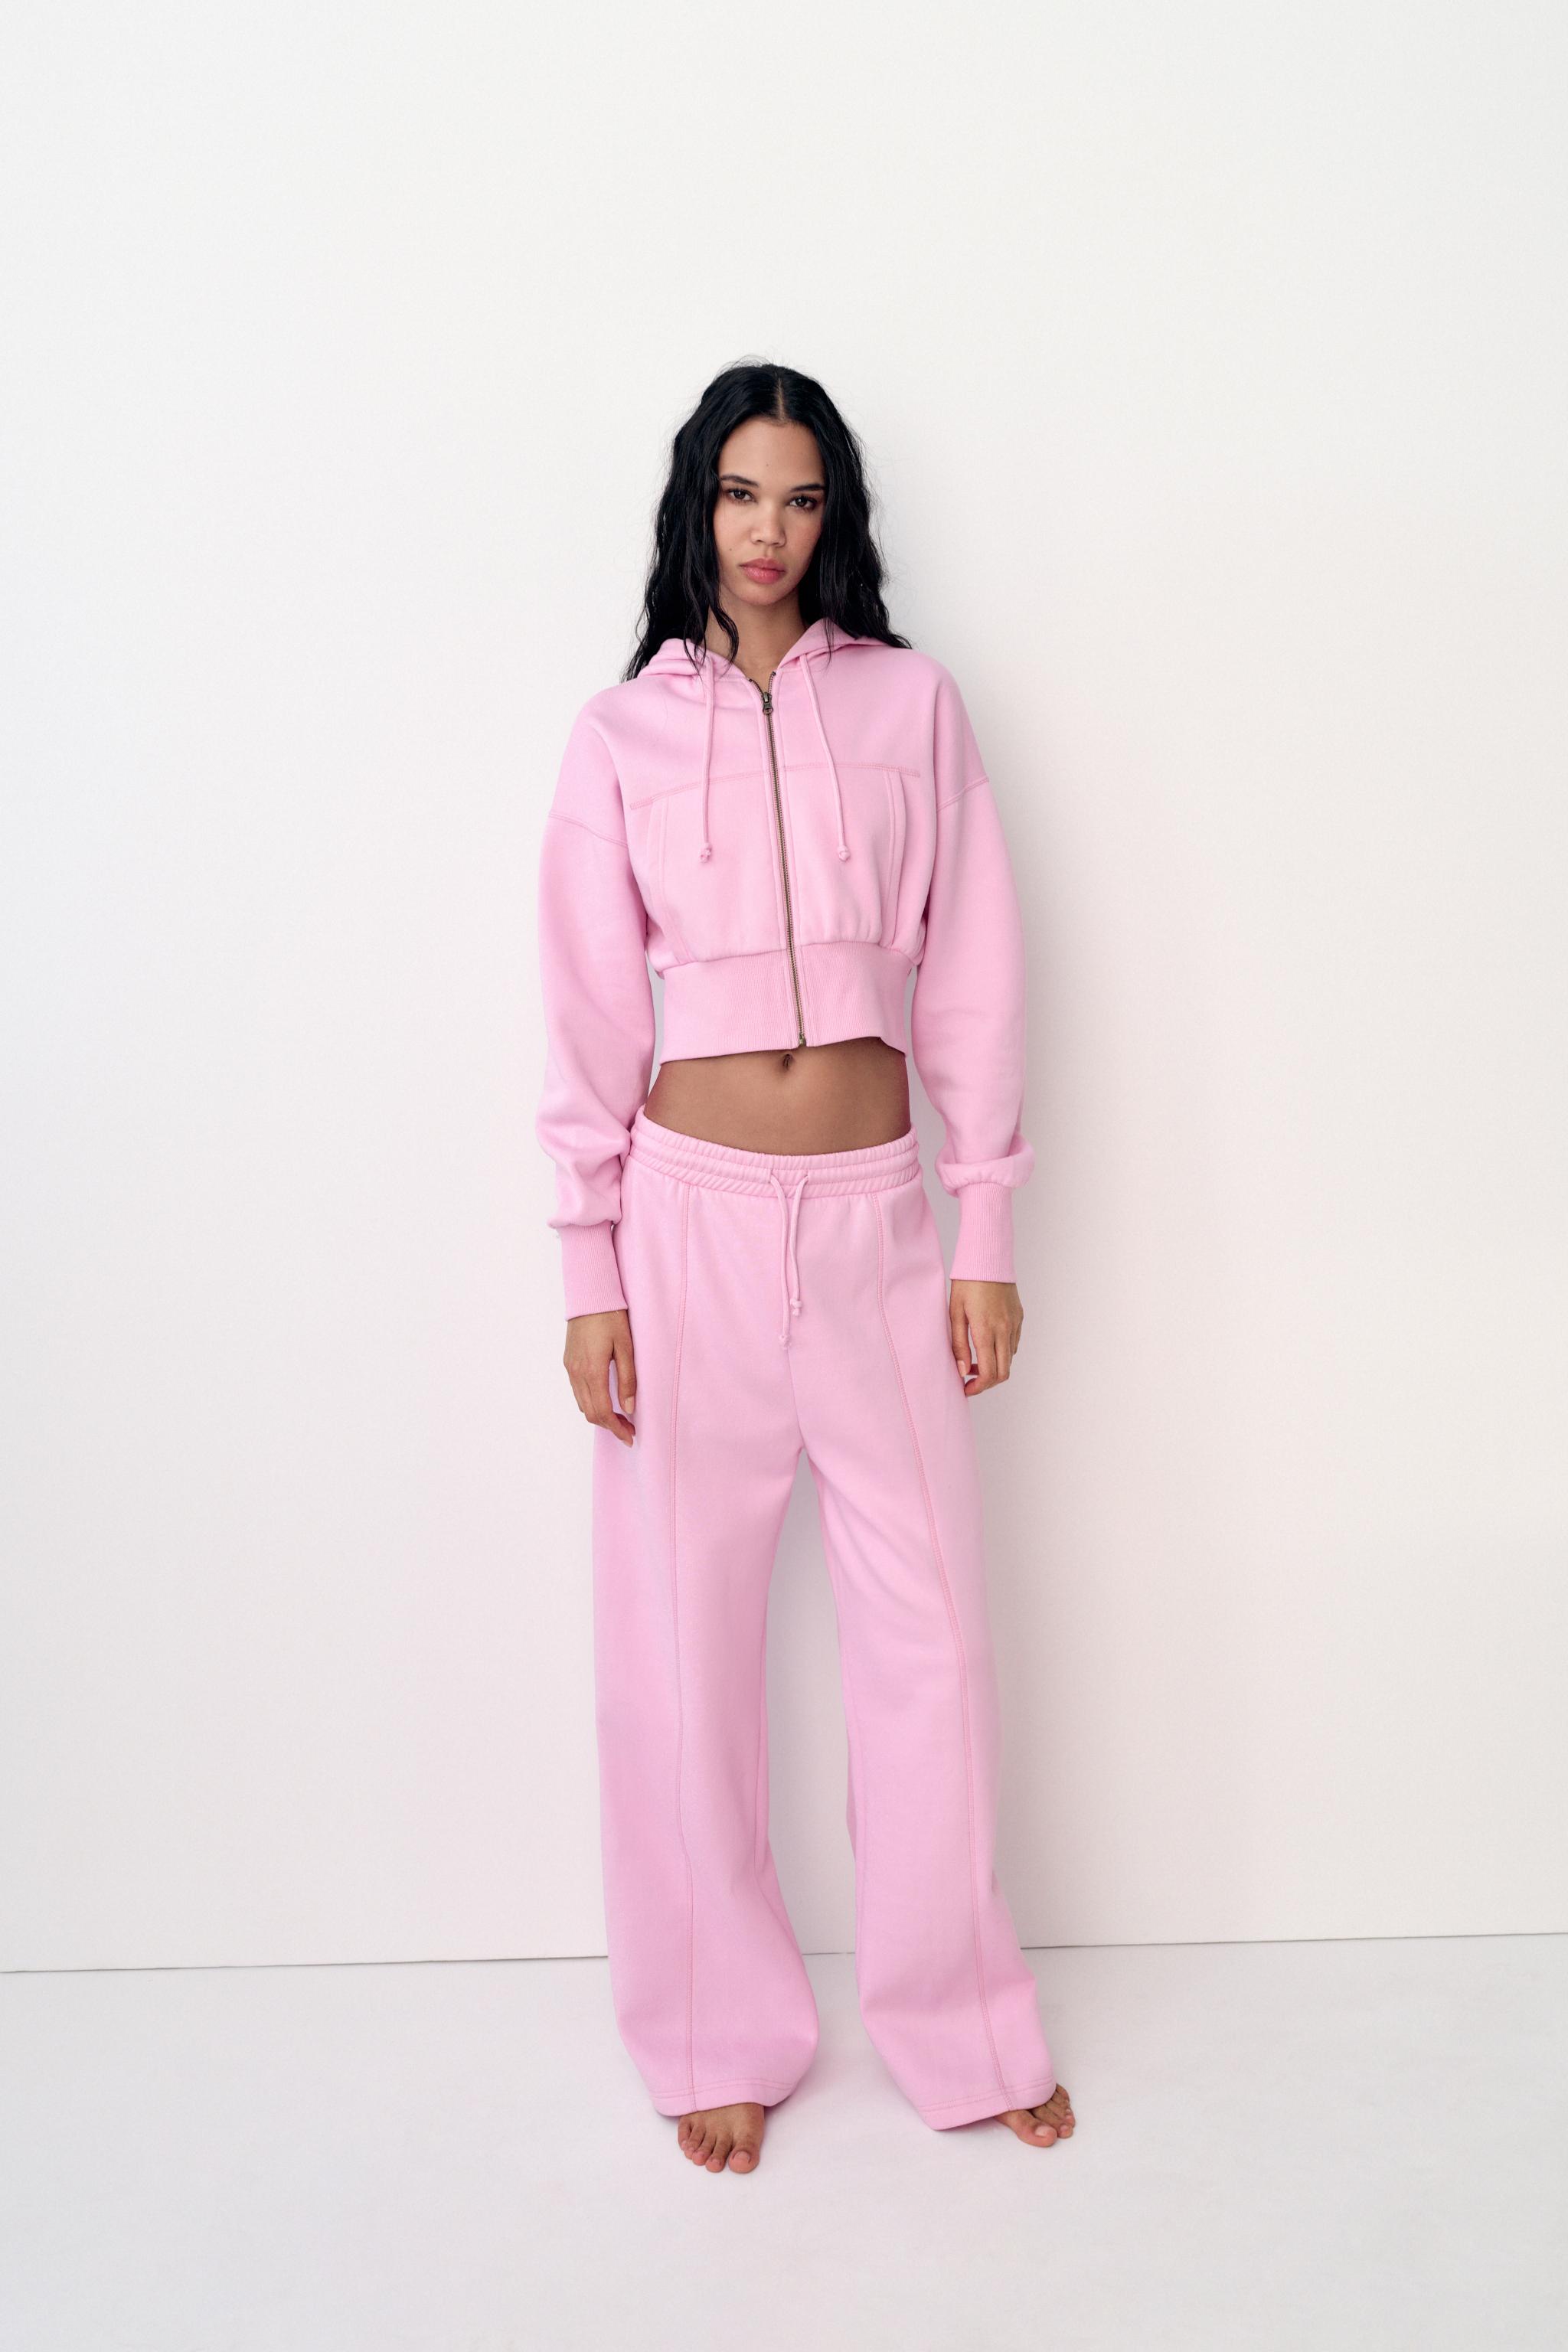 Vs Pink Sweatpants for Women Womens High Waist Shapewear Panties